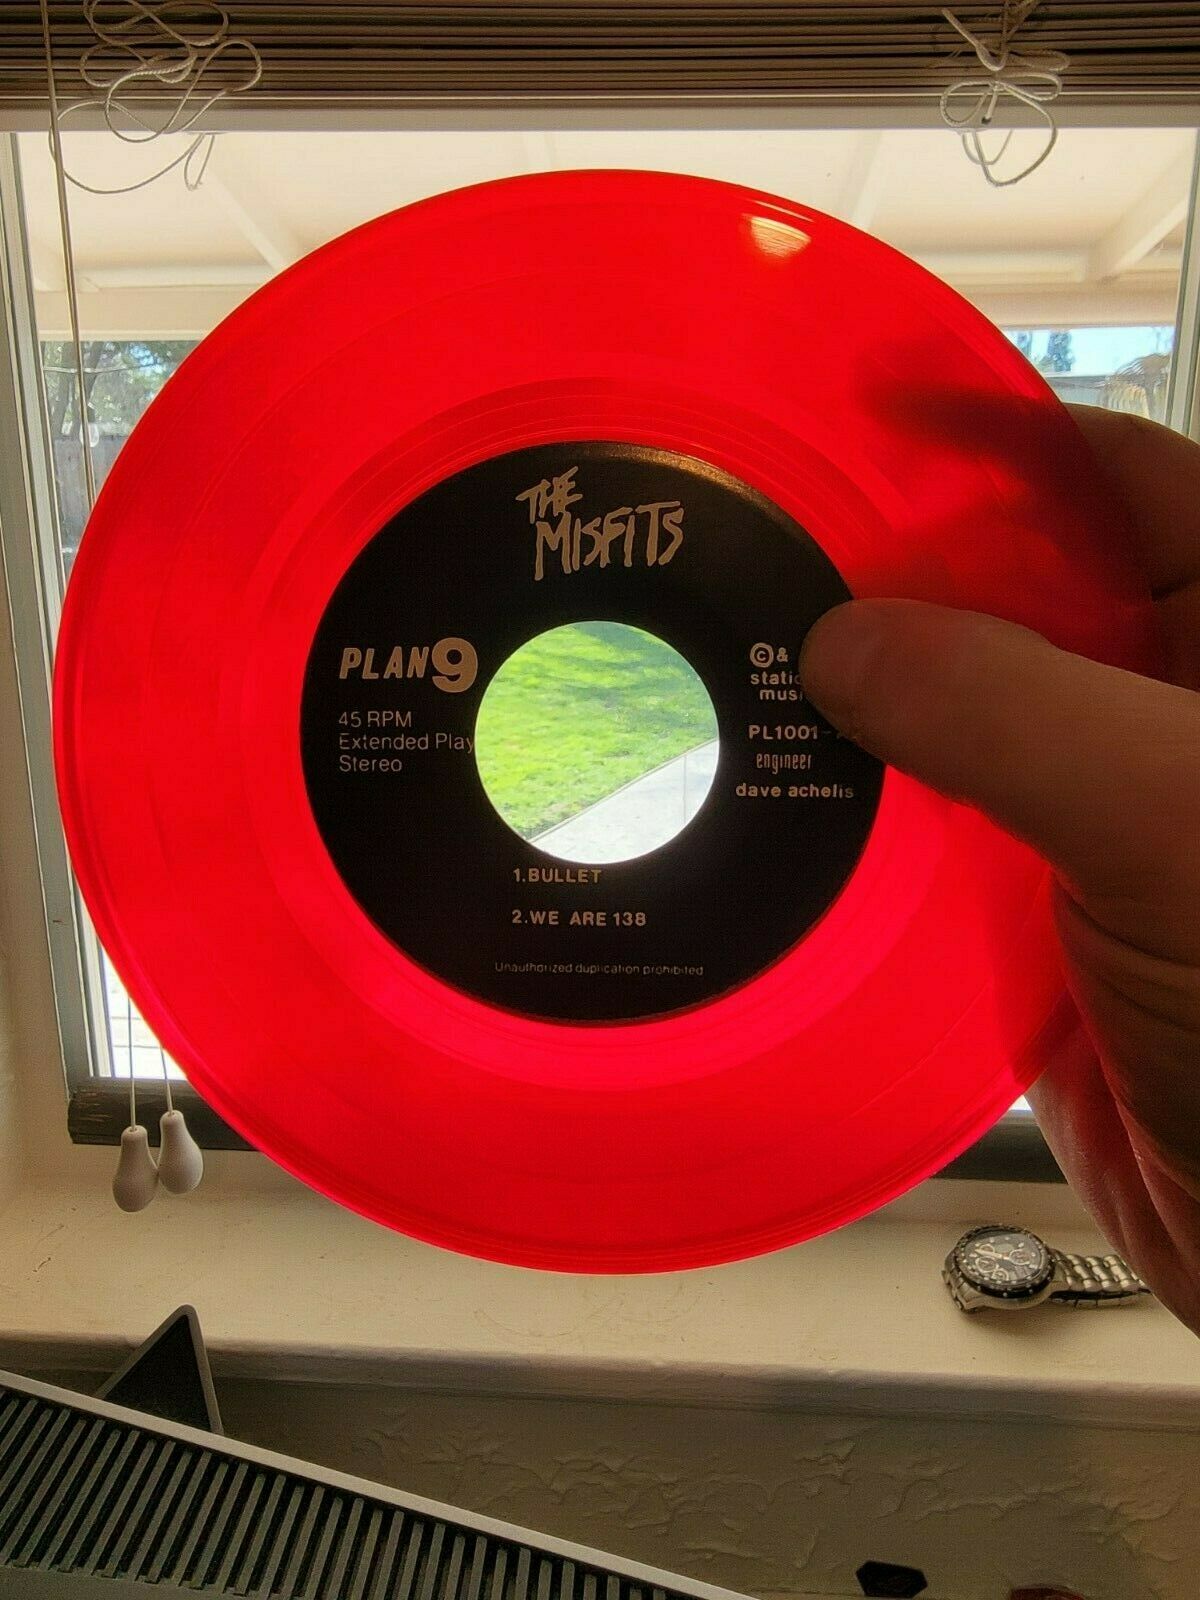 popsike.com - The Misfits - Bullet 7" Vinyl - Better Dead on Red - Press  1000 -Translucent Red - auction details